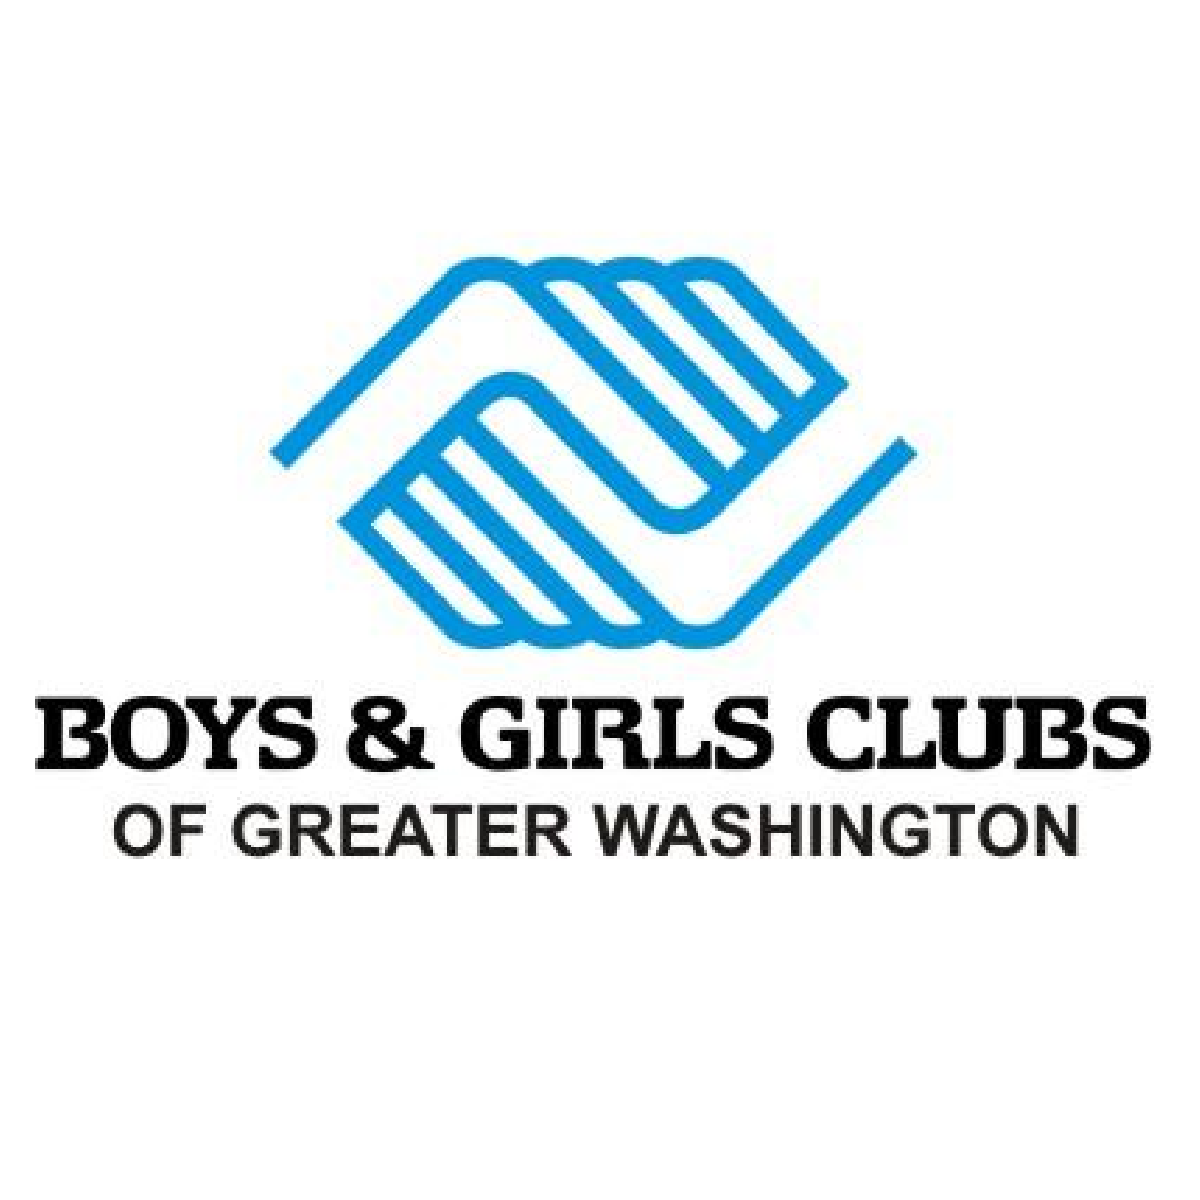 Boys & Girls Clubs of Greater Washington logo